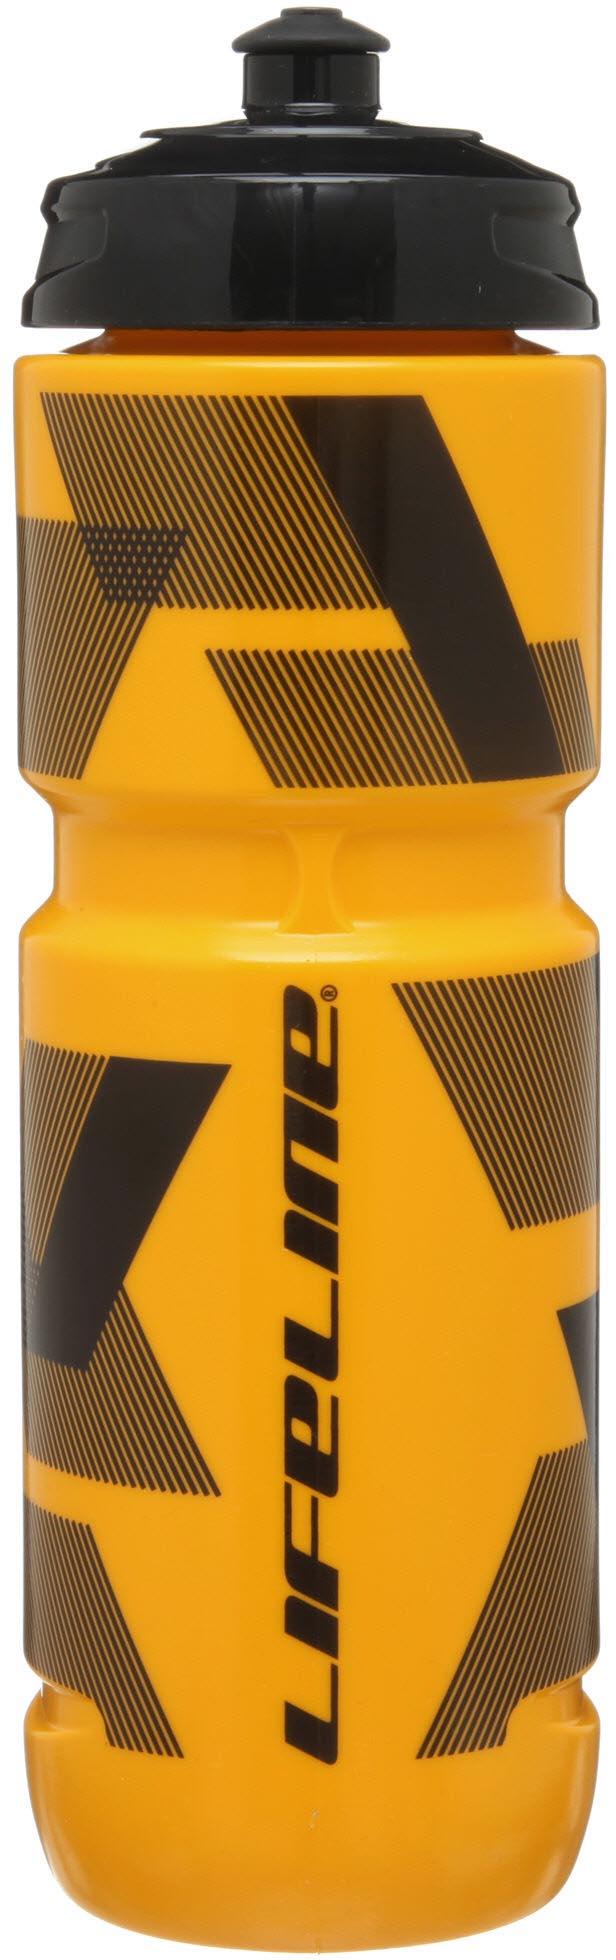 Lifeline Water Bottle 800ml - Yellow/black